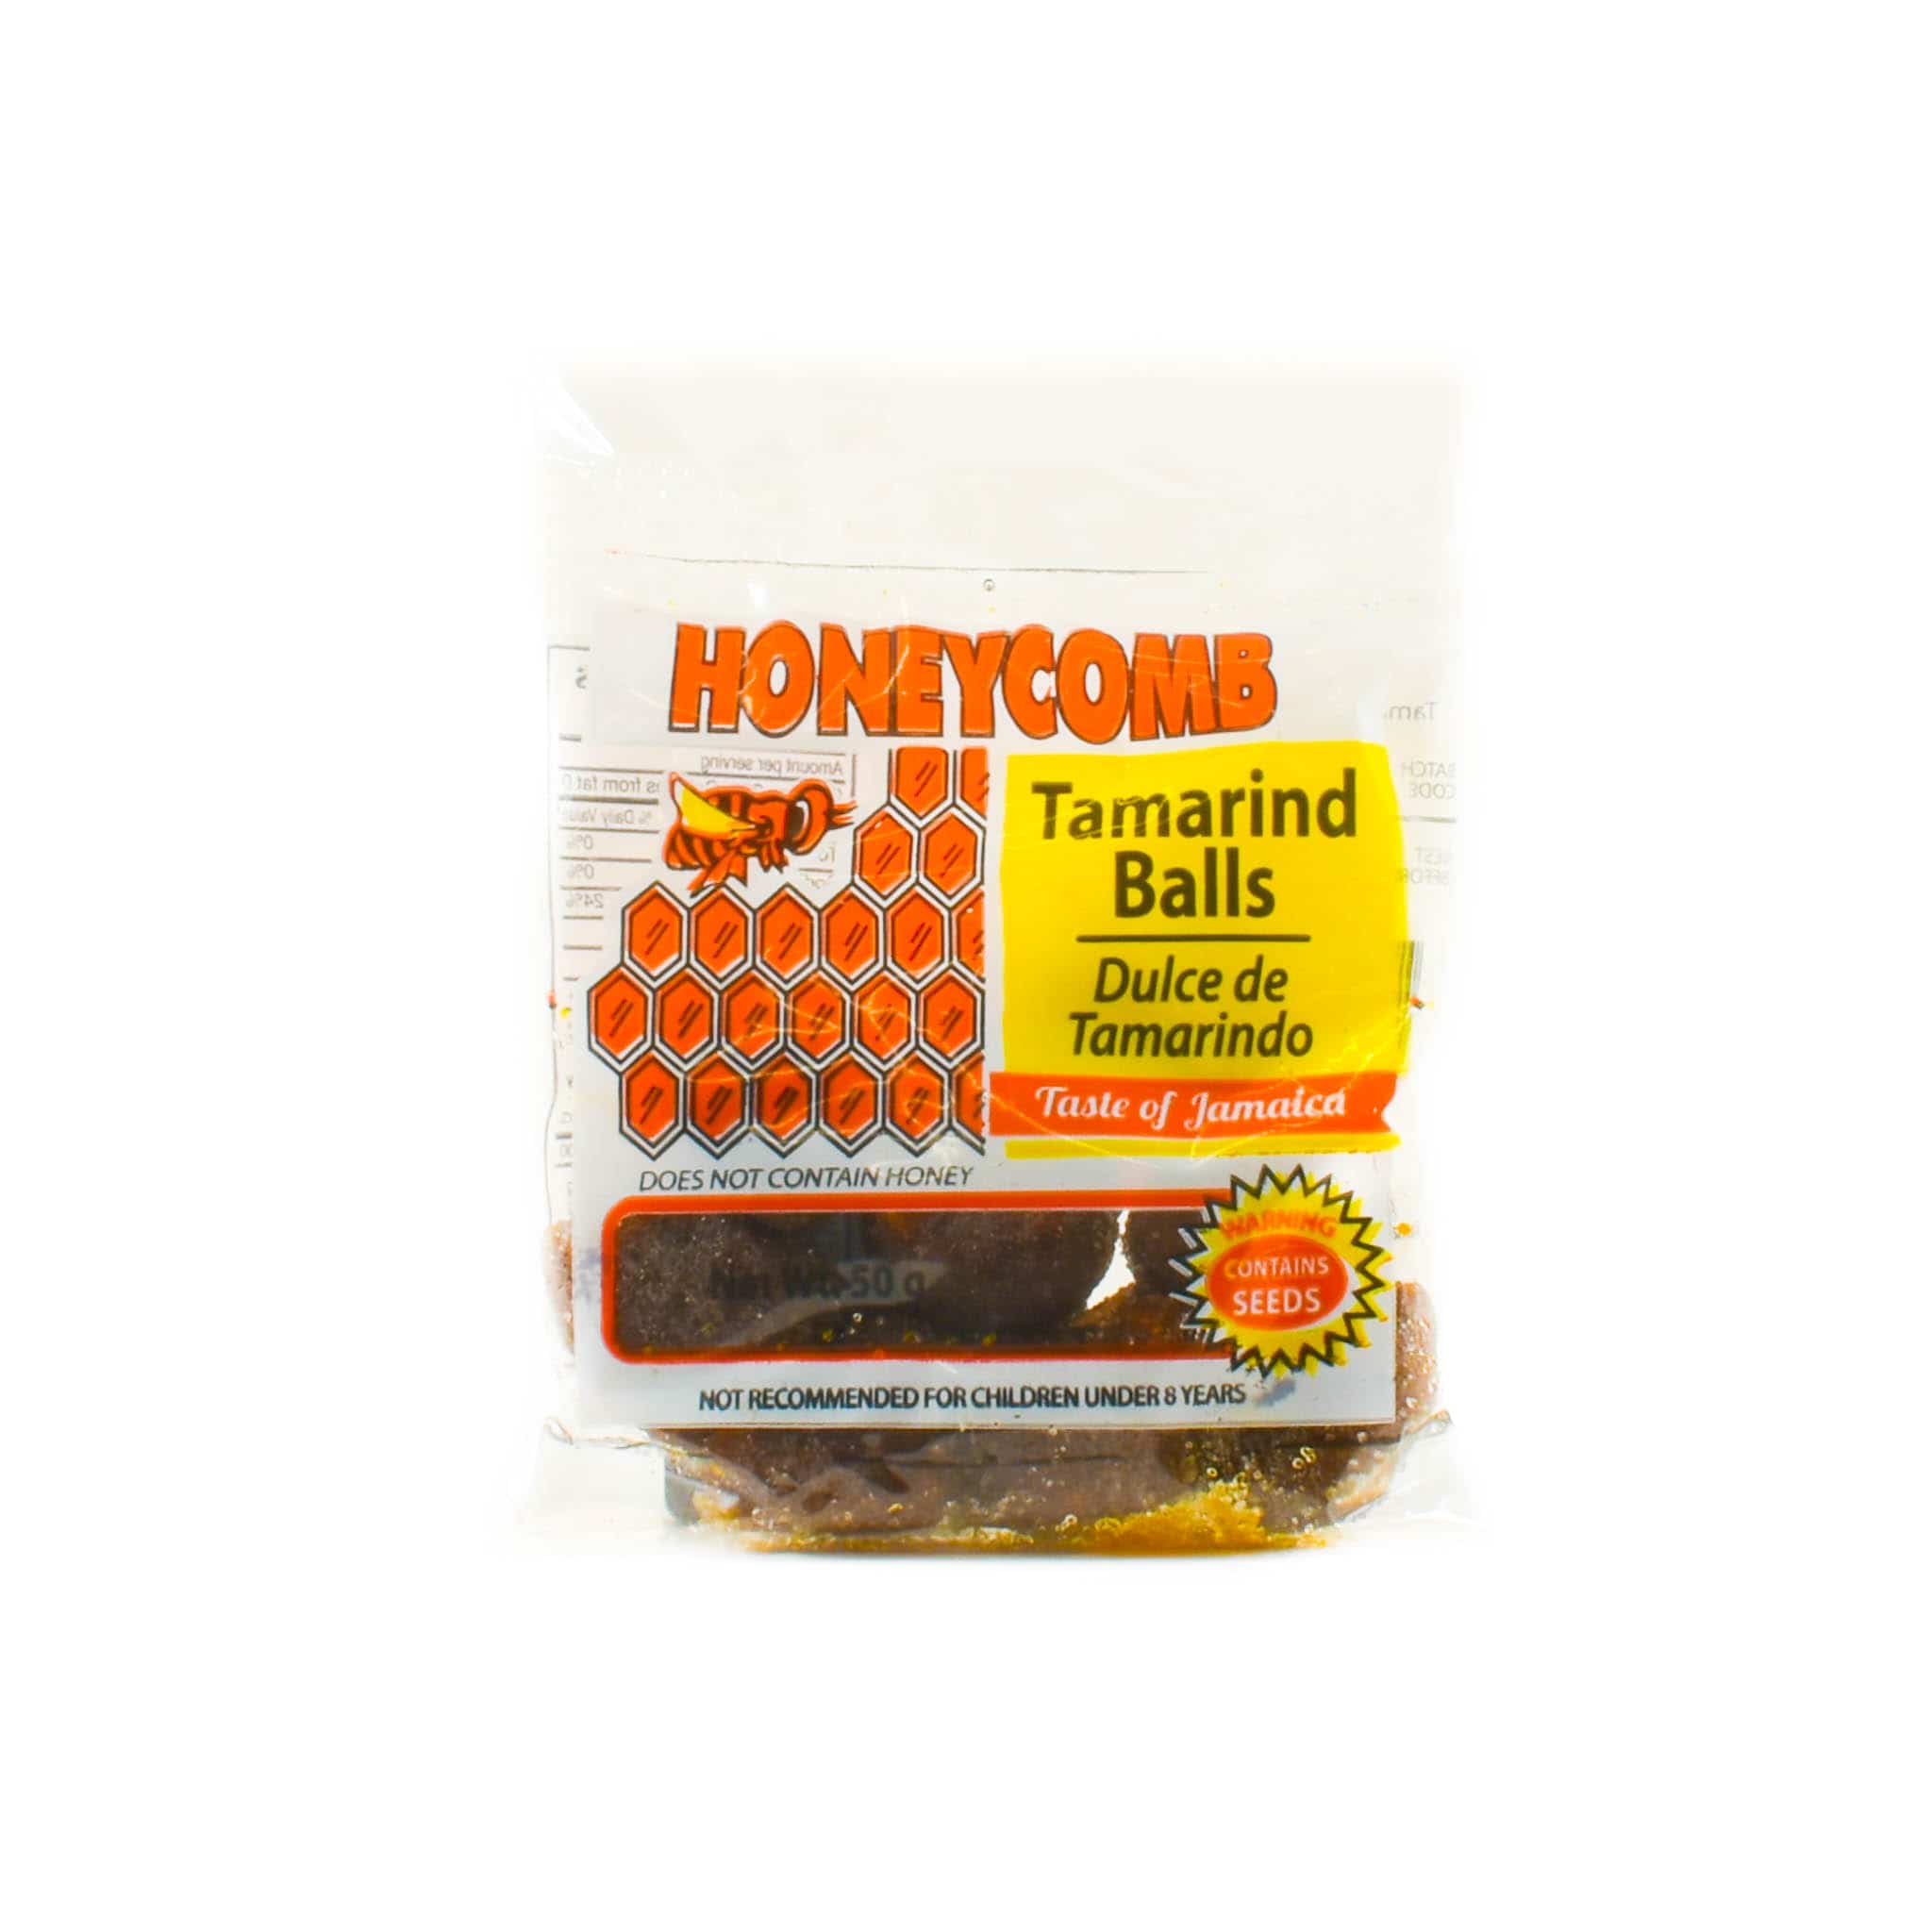 Honeycomb Tamarind Balls, 76g